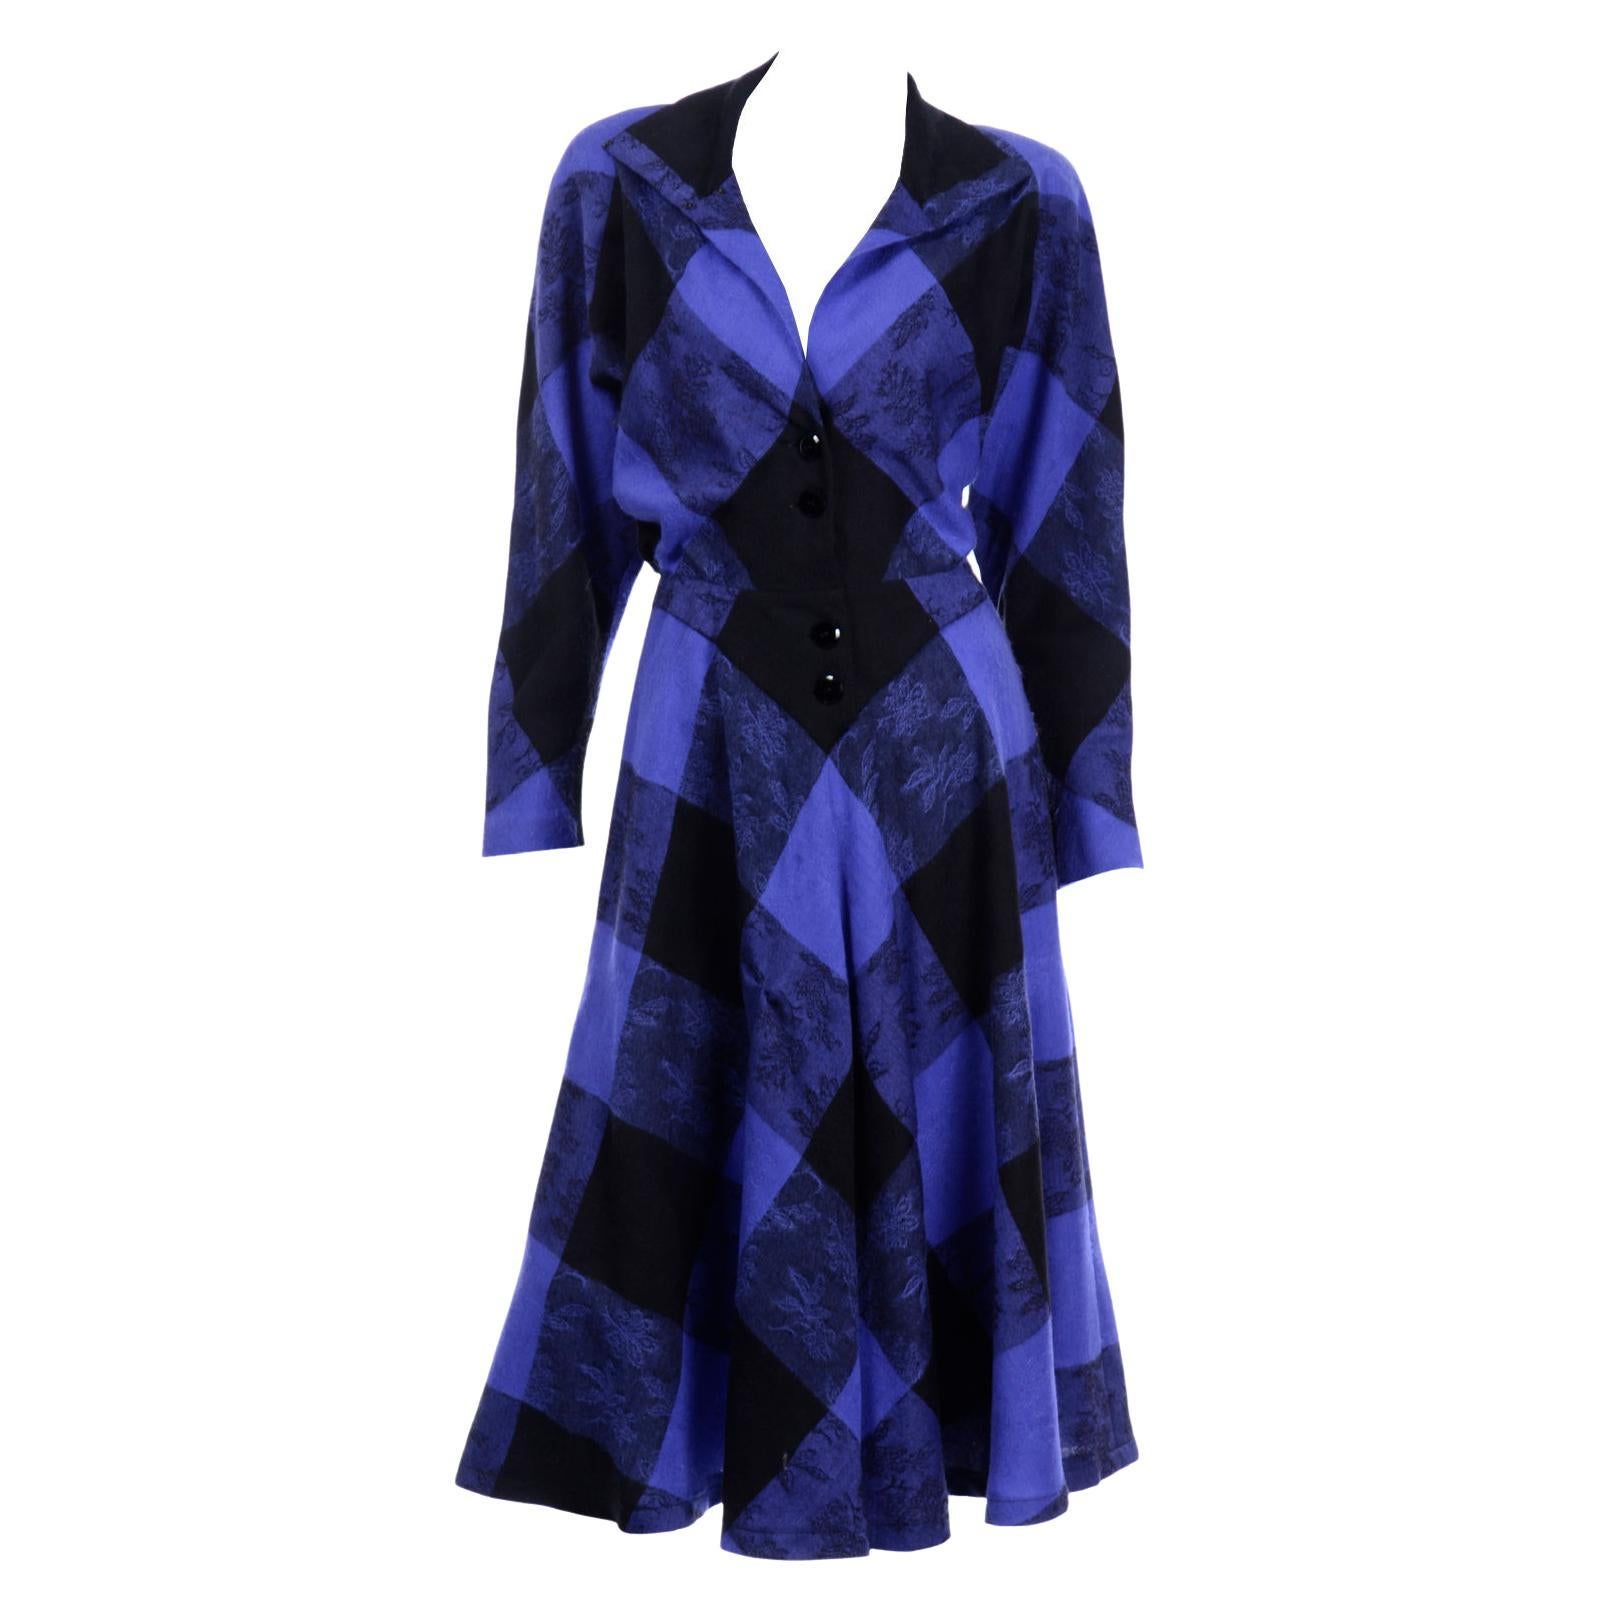 Norma Walters 1980s Vintage Blue & Black Plaid Wool Dress